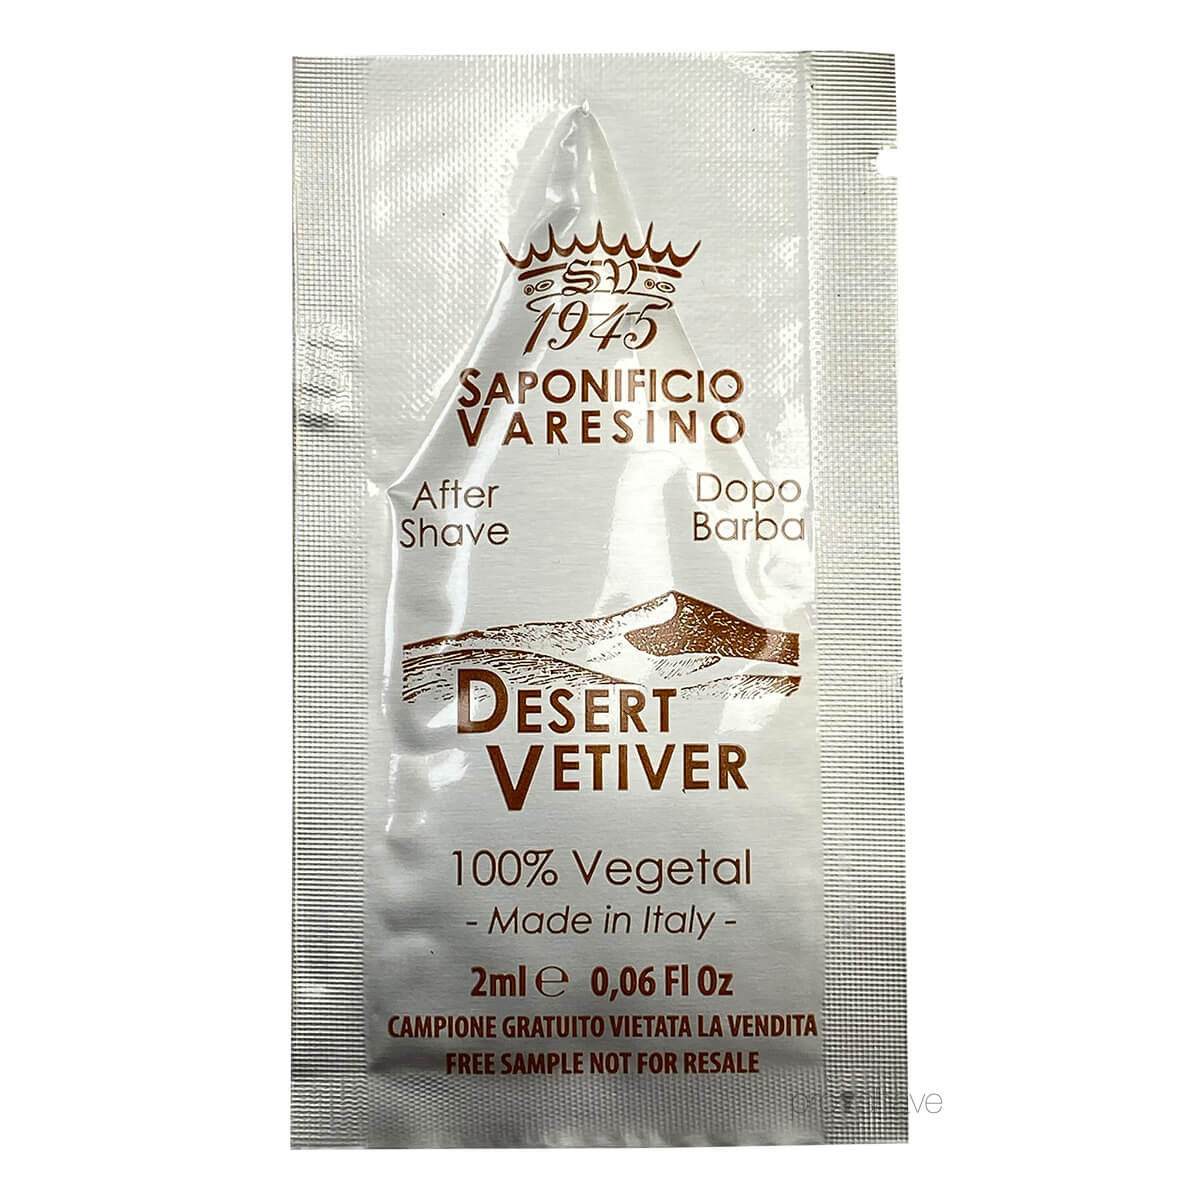 Saponificio Varesino Aftershave, Desert Vetiver, SAMPLE, 2 ml.